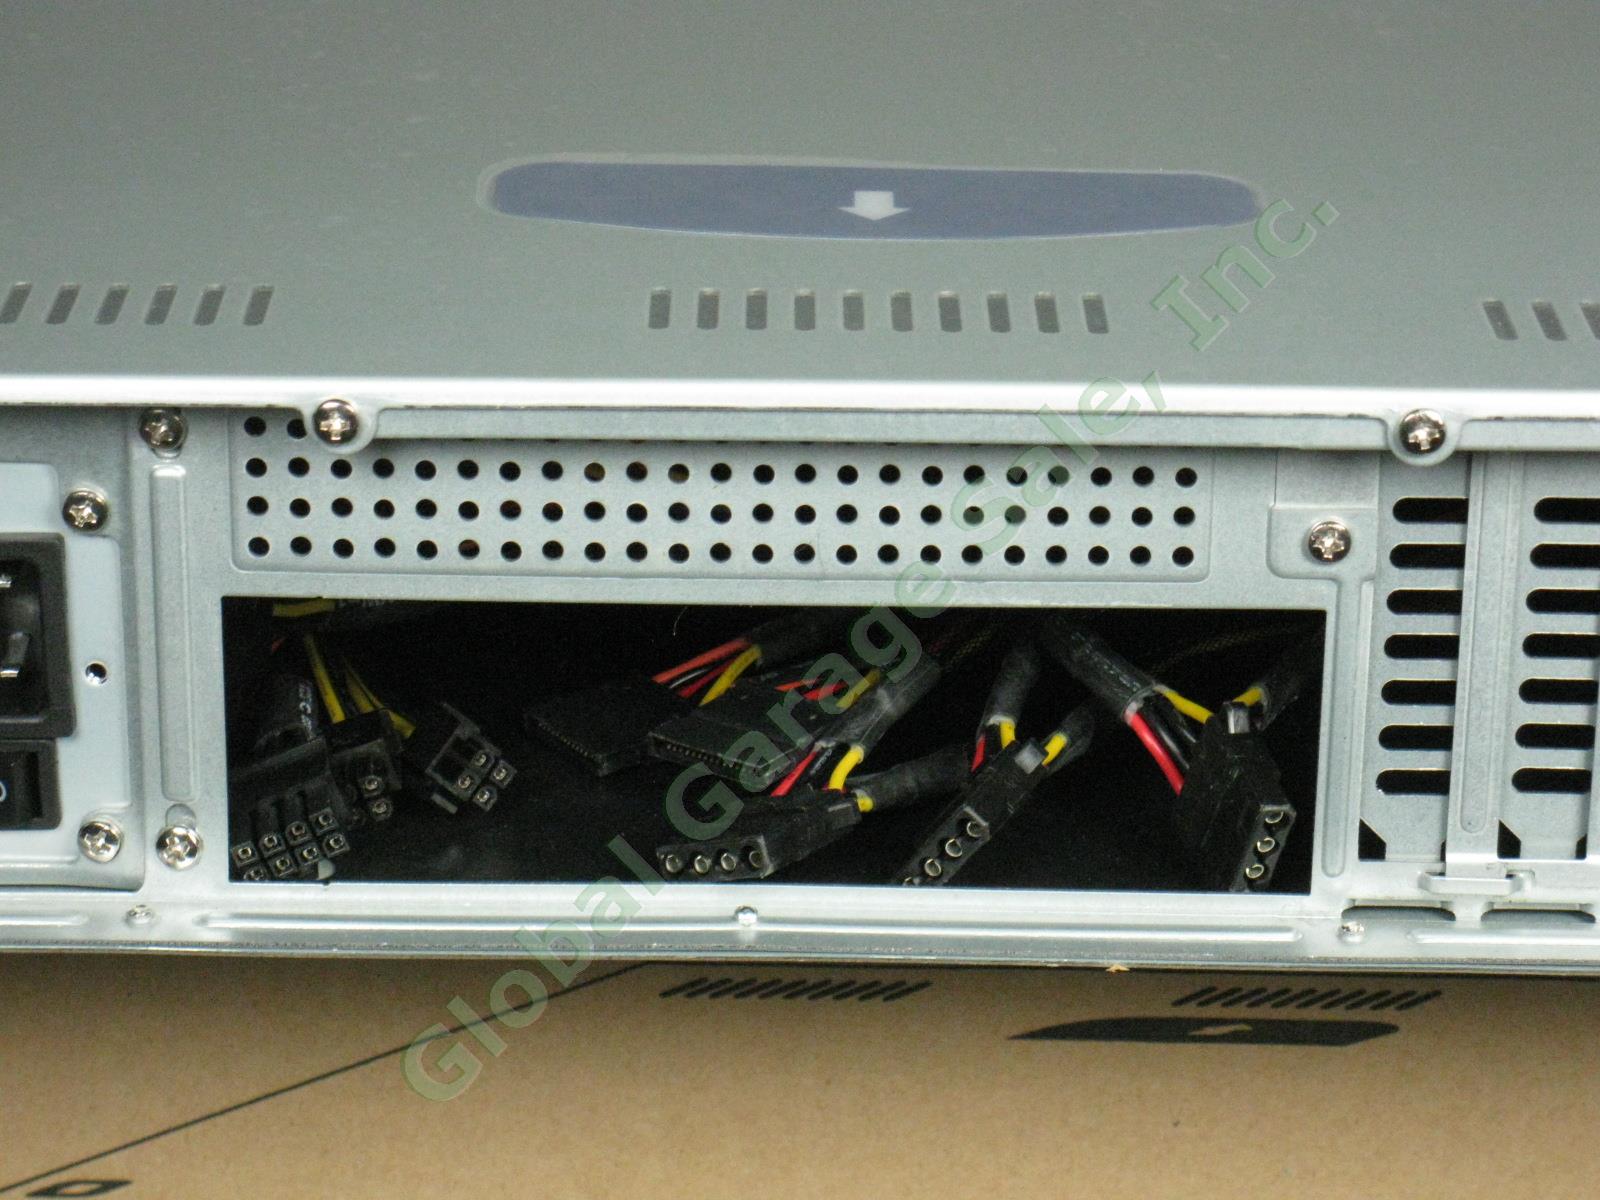 NEW In Box 2U 8-Bay Hot Swap Server Case 8 HDD Hard Drive Trays Slim CD-ROM FDD 5